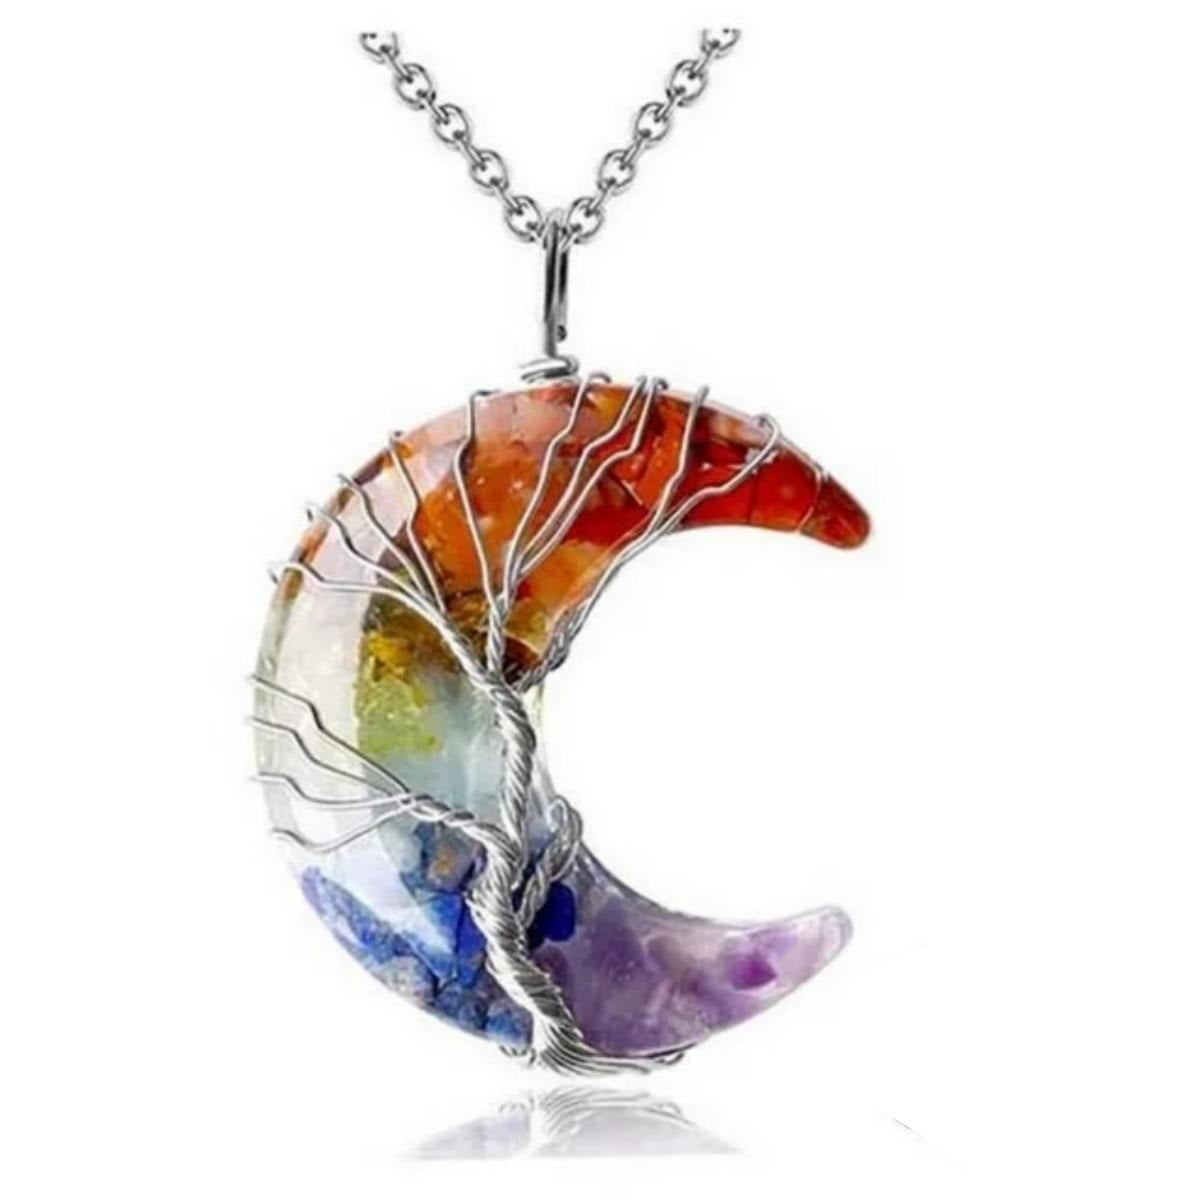 Buy Jovivi Crystal Quartz Tree Life Pendant Necklace,7 Chakras Gemstone  Charms at Amazon.in